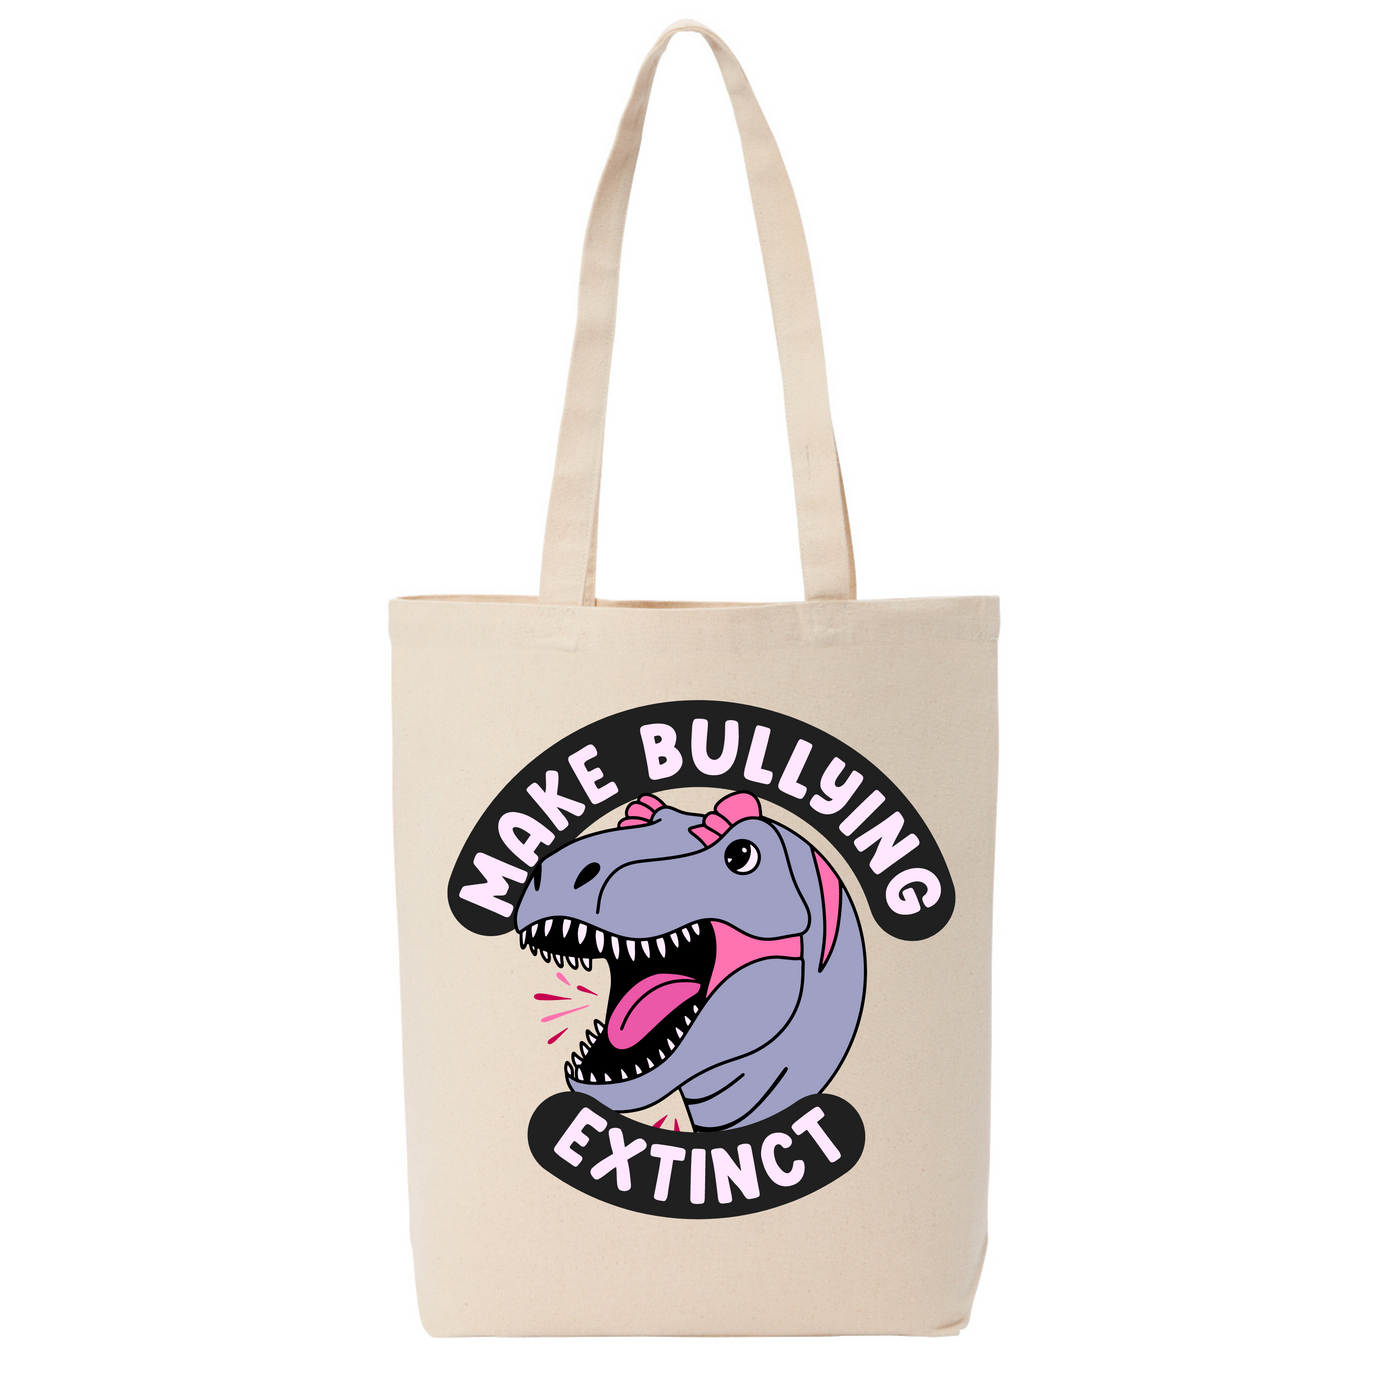 "Make Bullying Extinct" Tote Bag